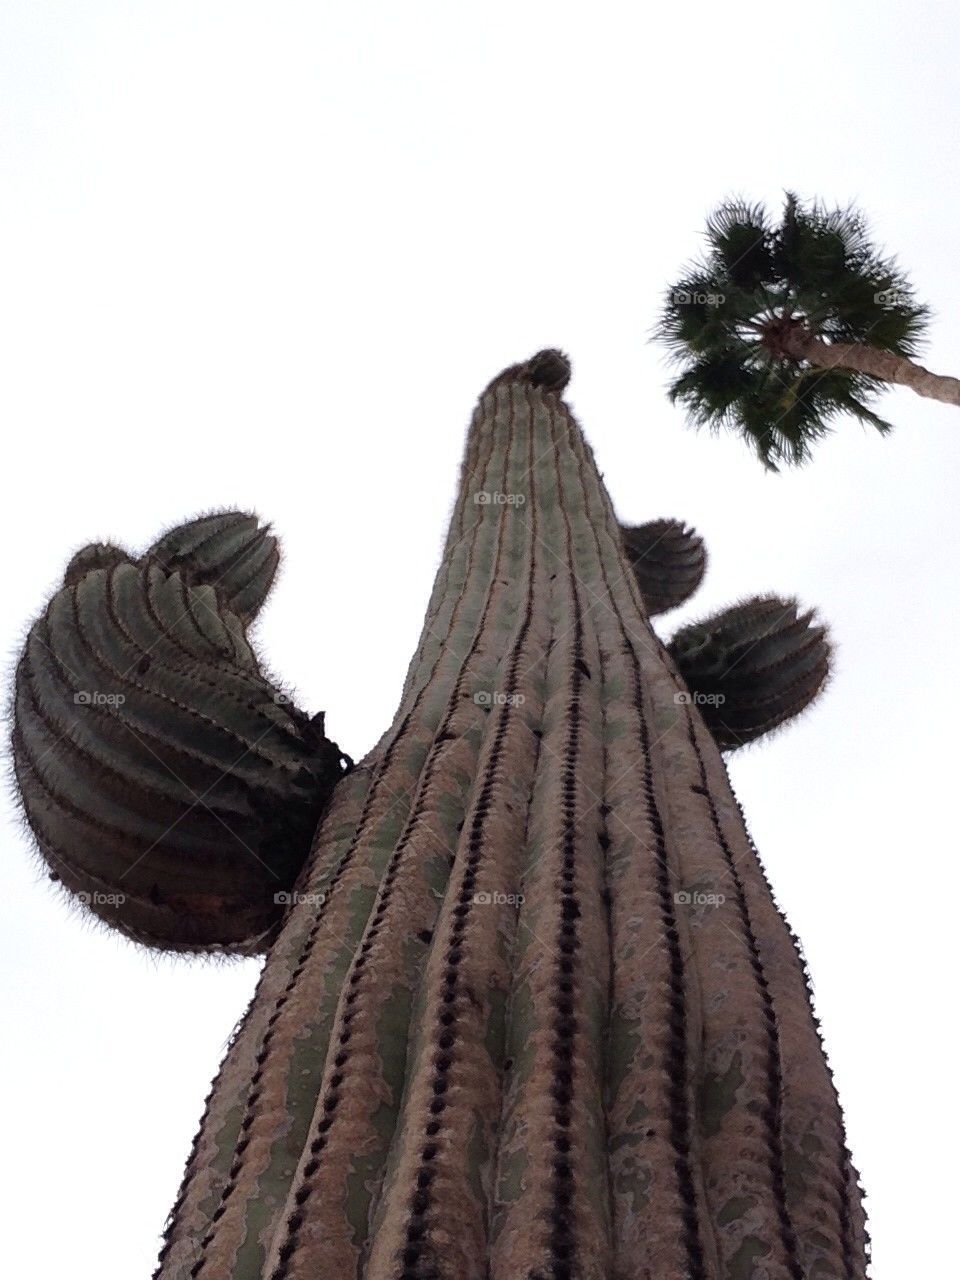 Gigant saguaro 